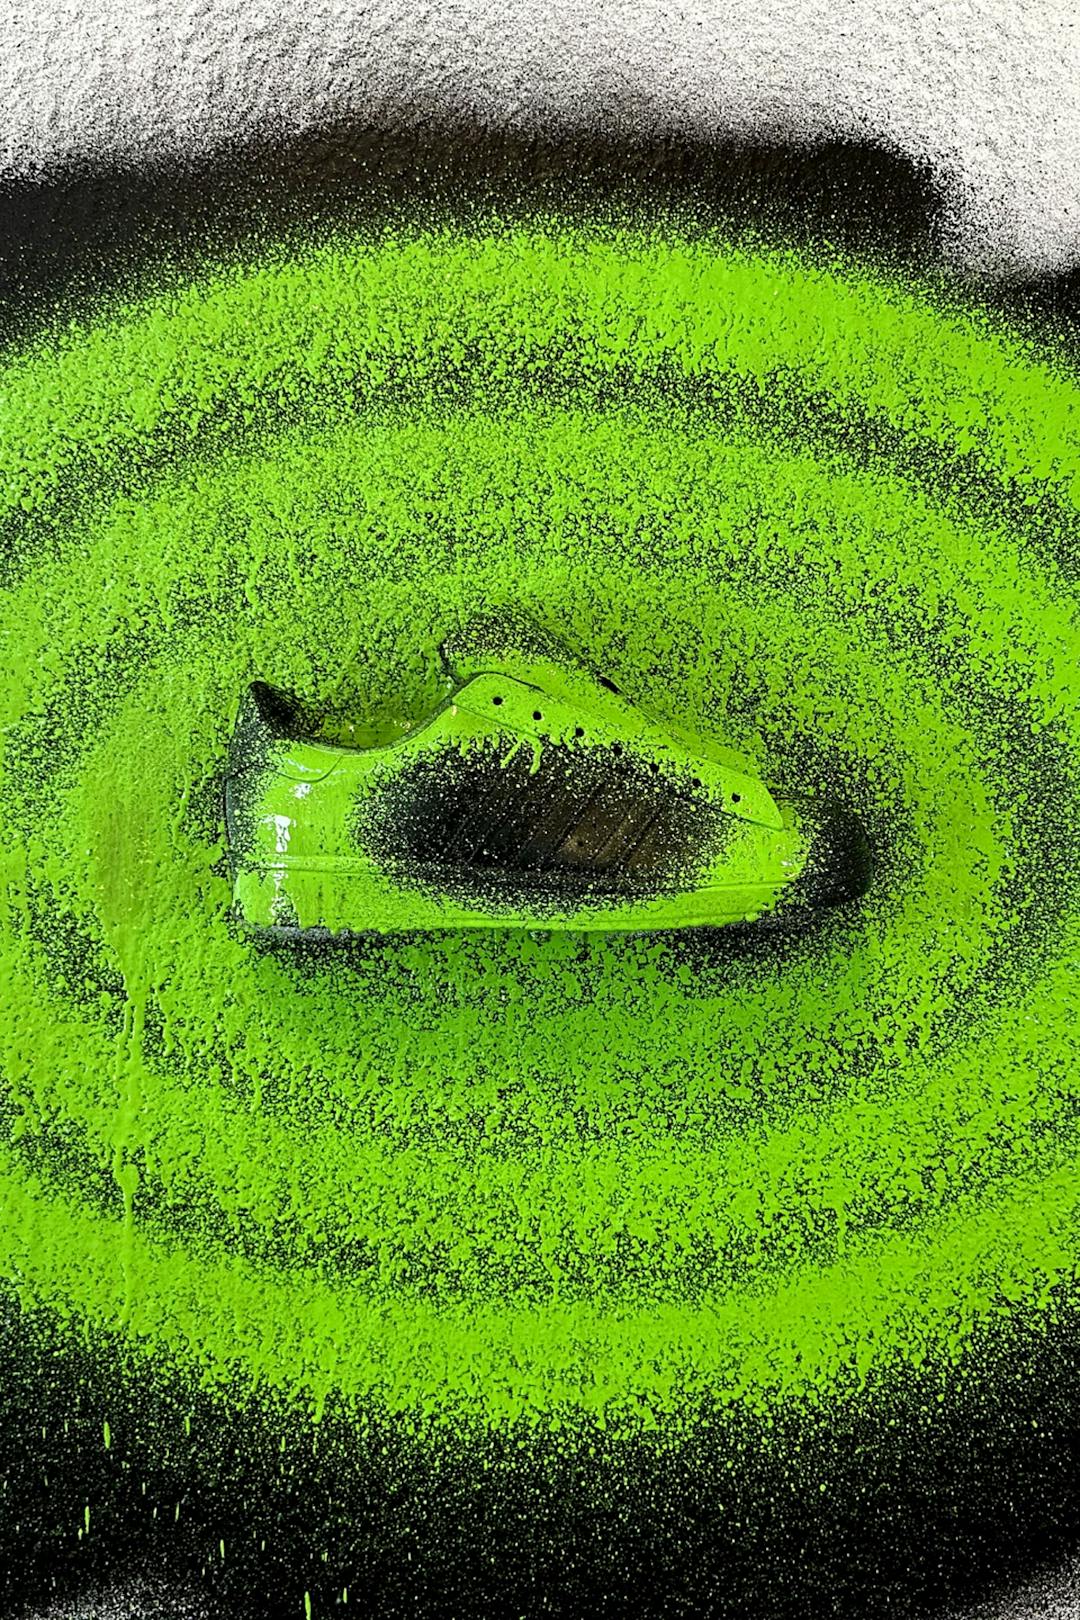 Green circular illustration on shoe.